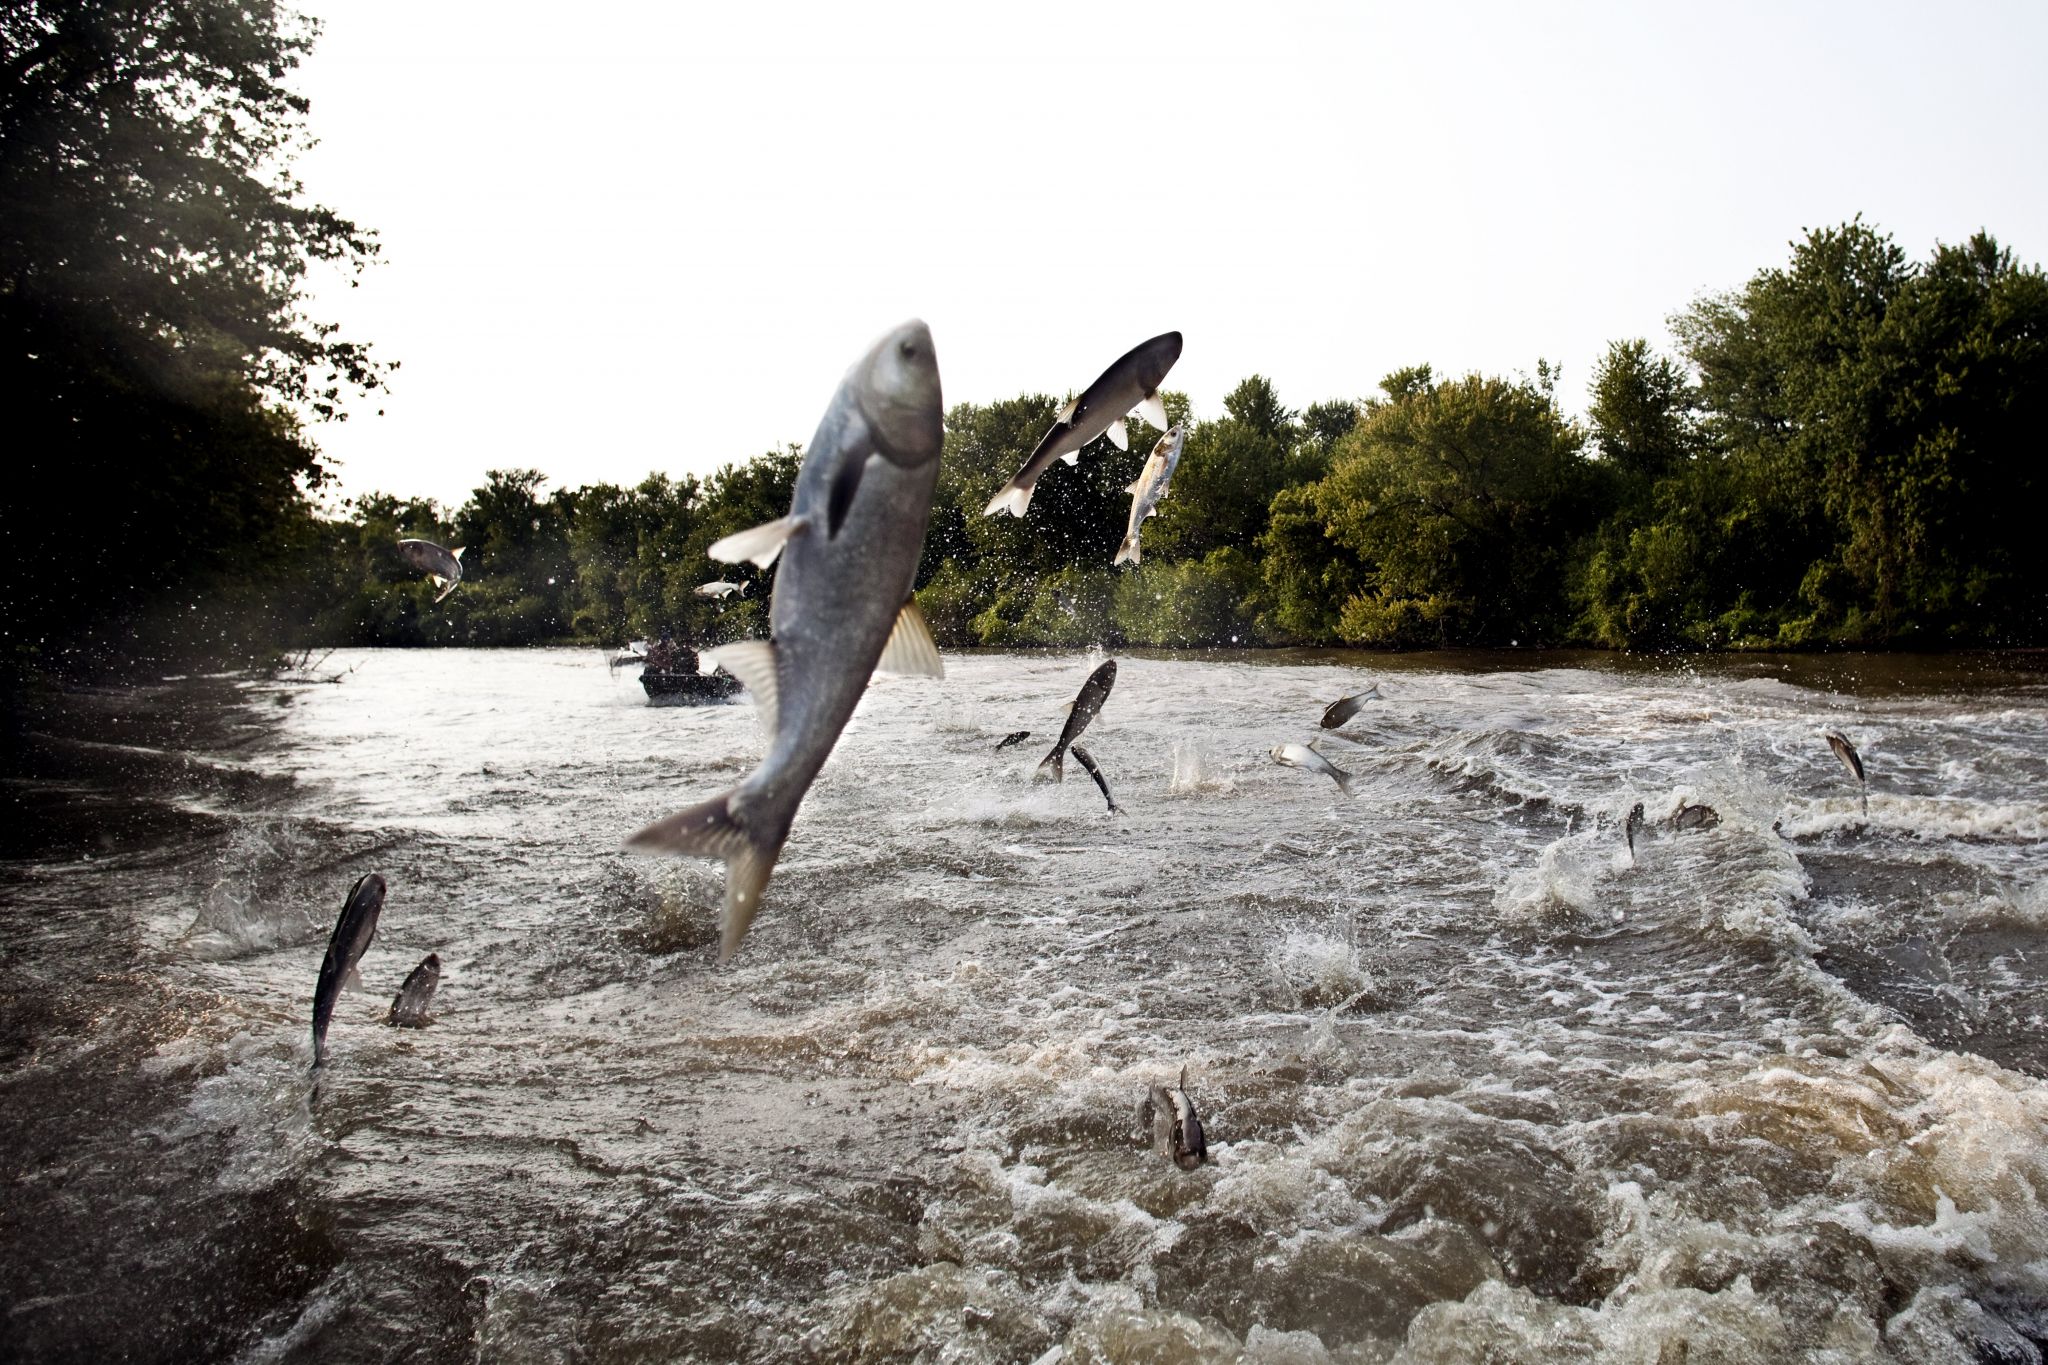 Redneck Fishing Tournament returns to nab invasive carp from river